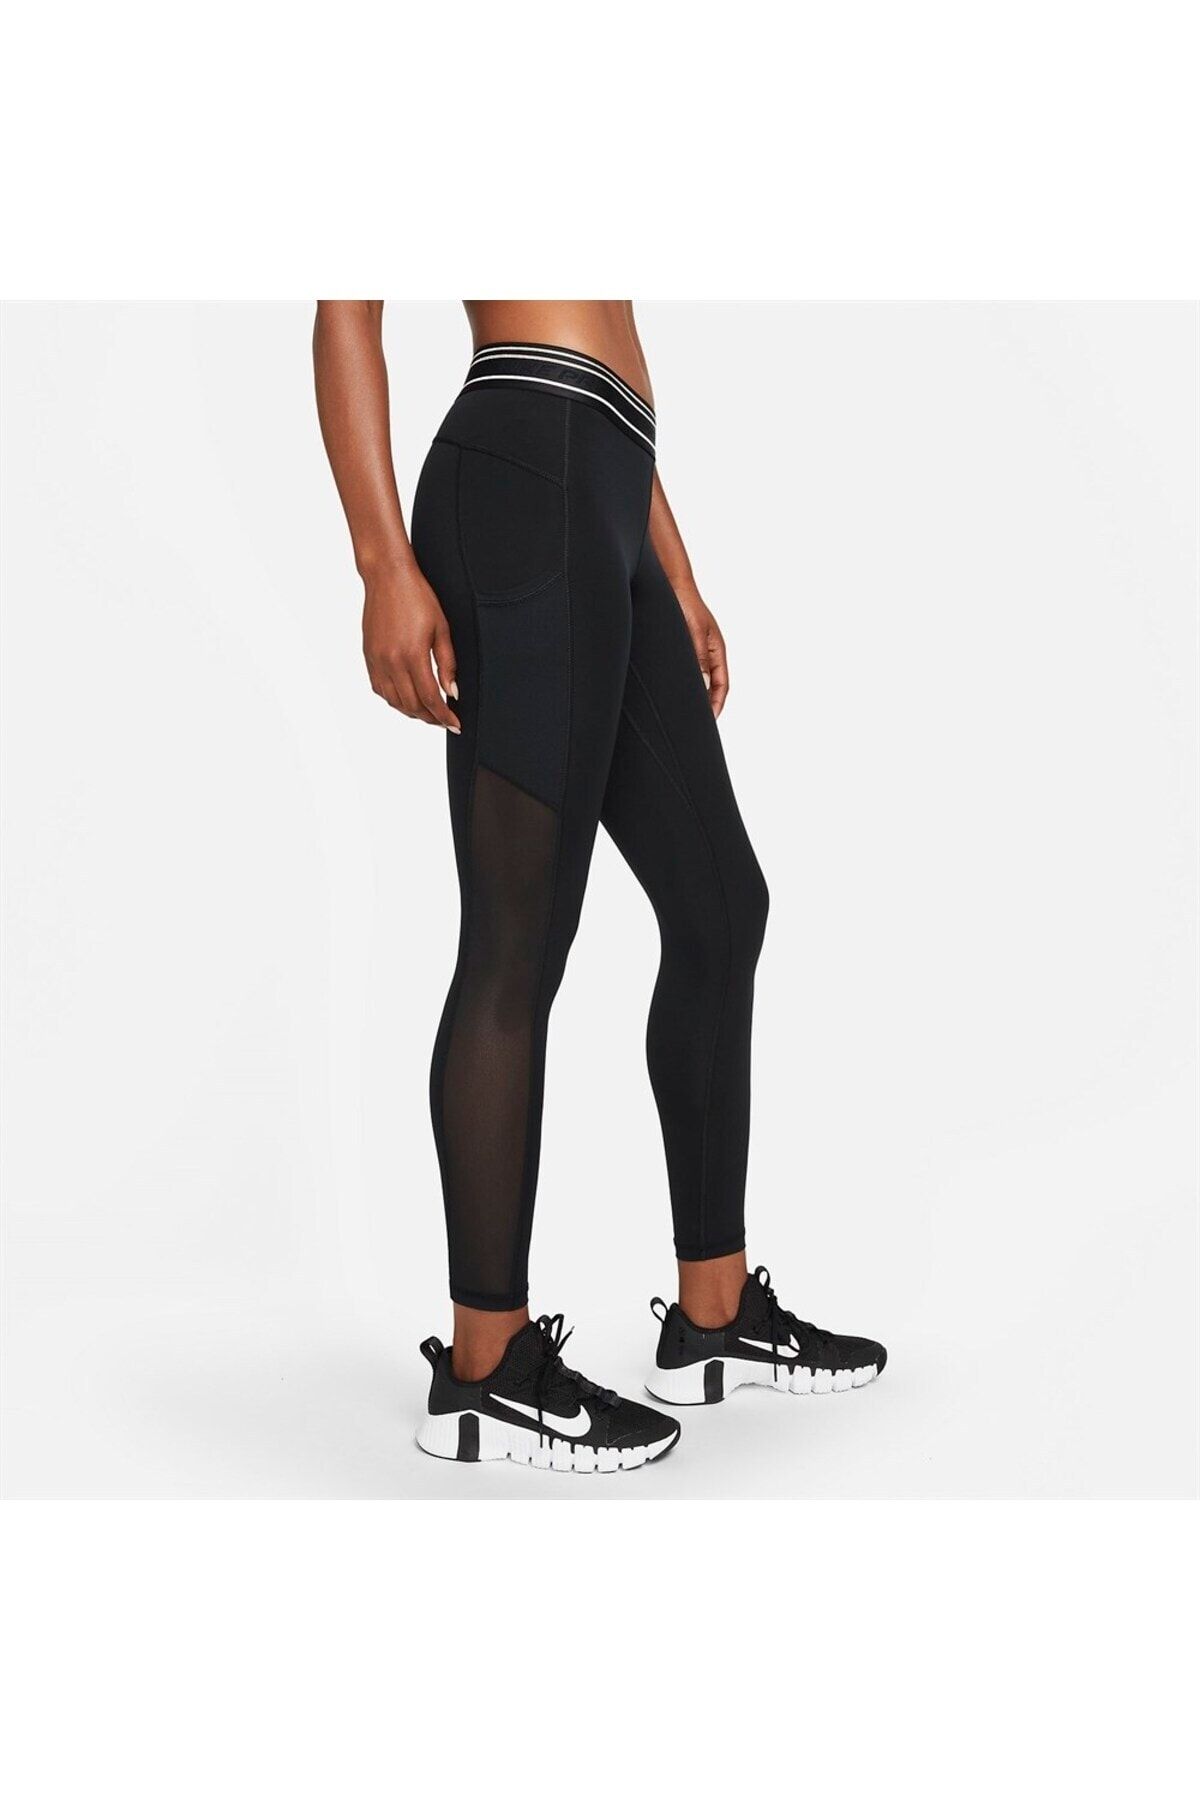 Nike Pro 365 Mid-rise Crop Training Legging Gray Black Leggings - Trendyol